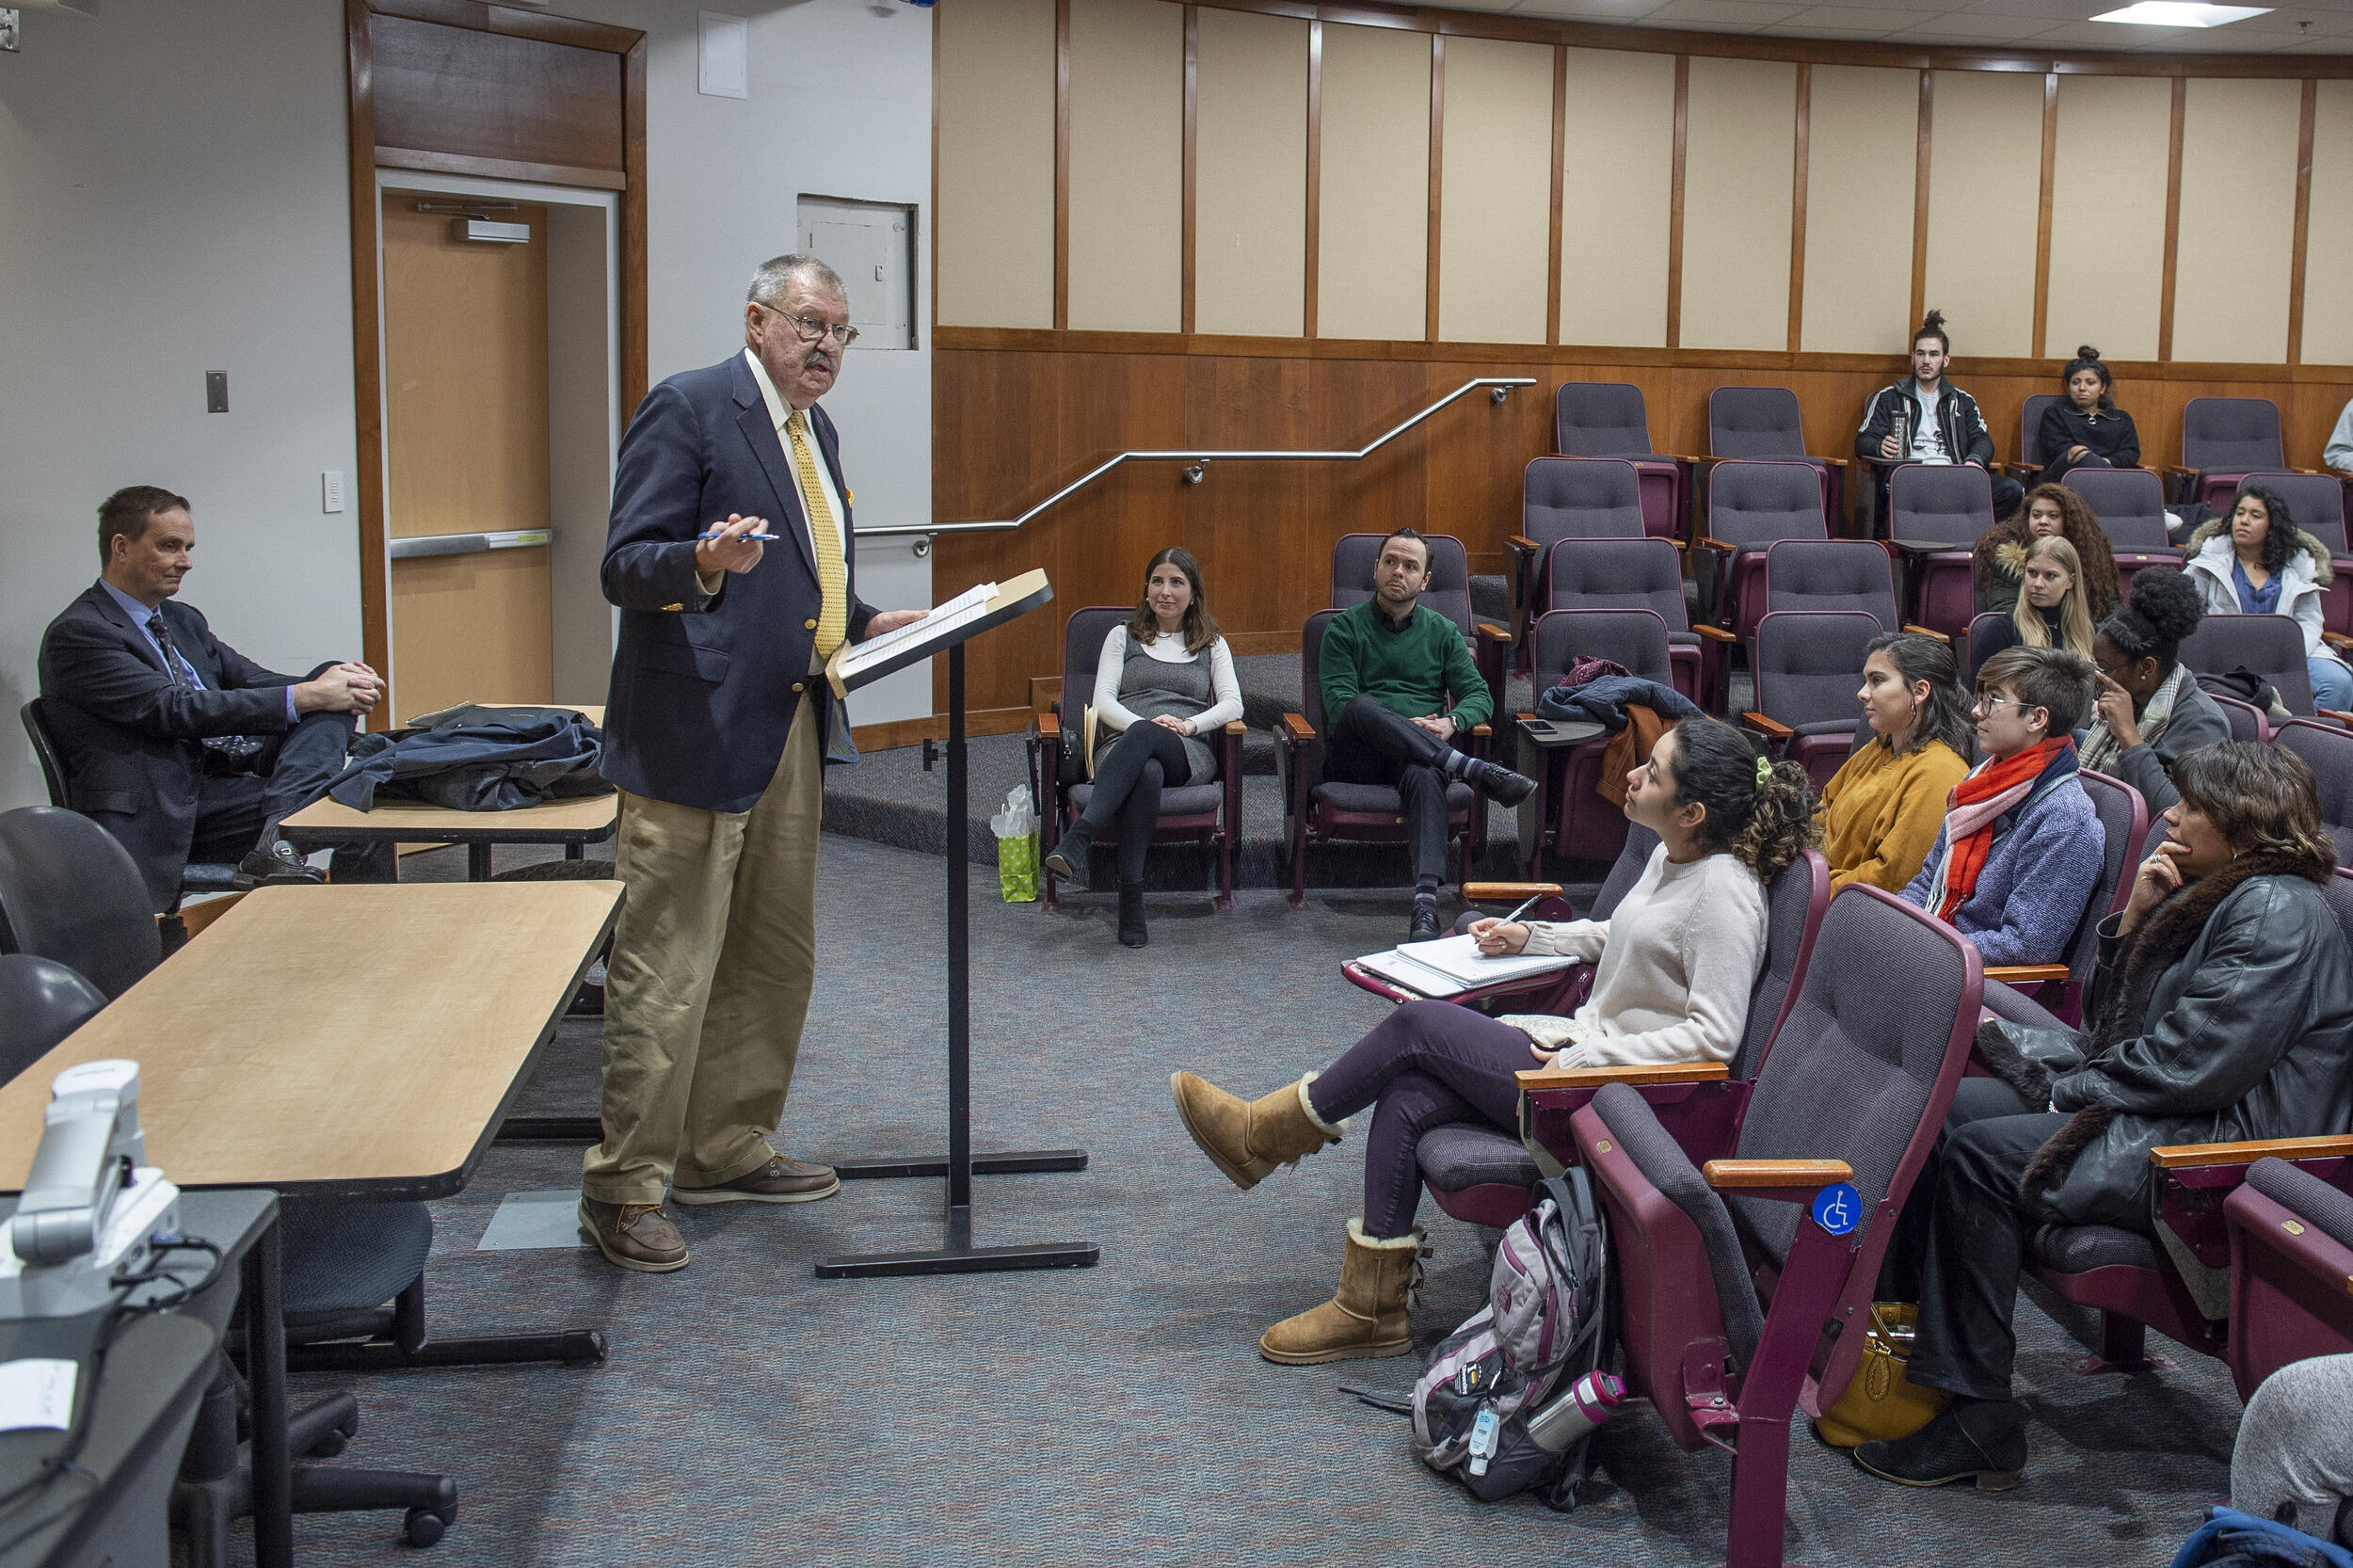 Paul Schmidt speaks to a classroom of students.